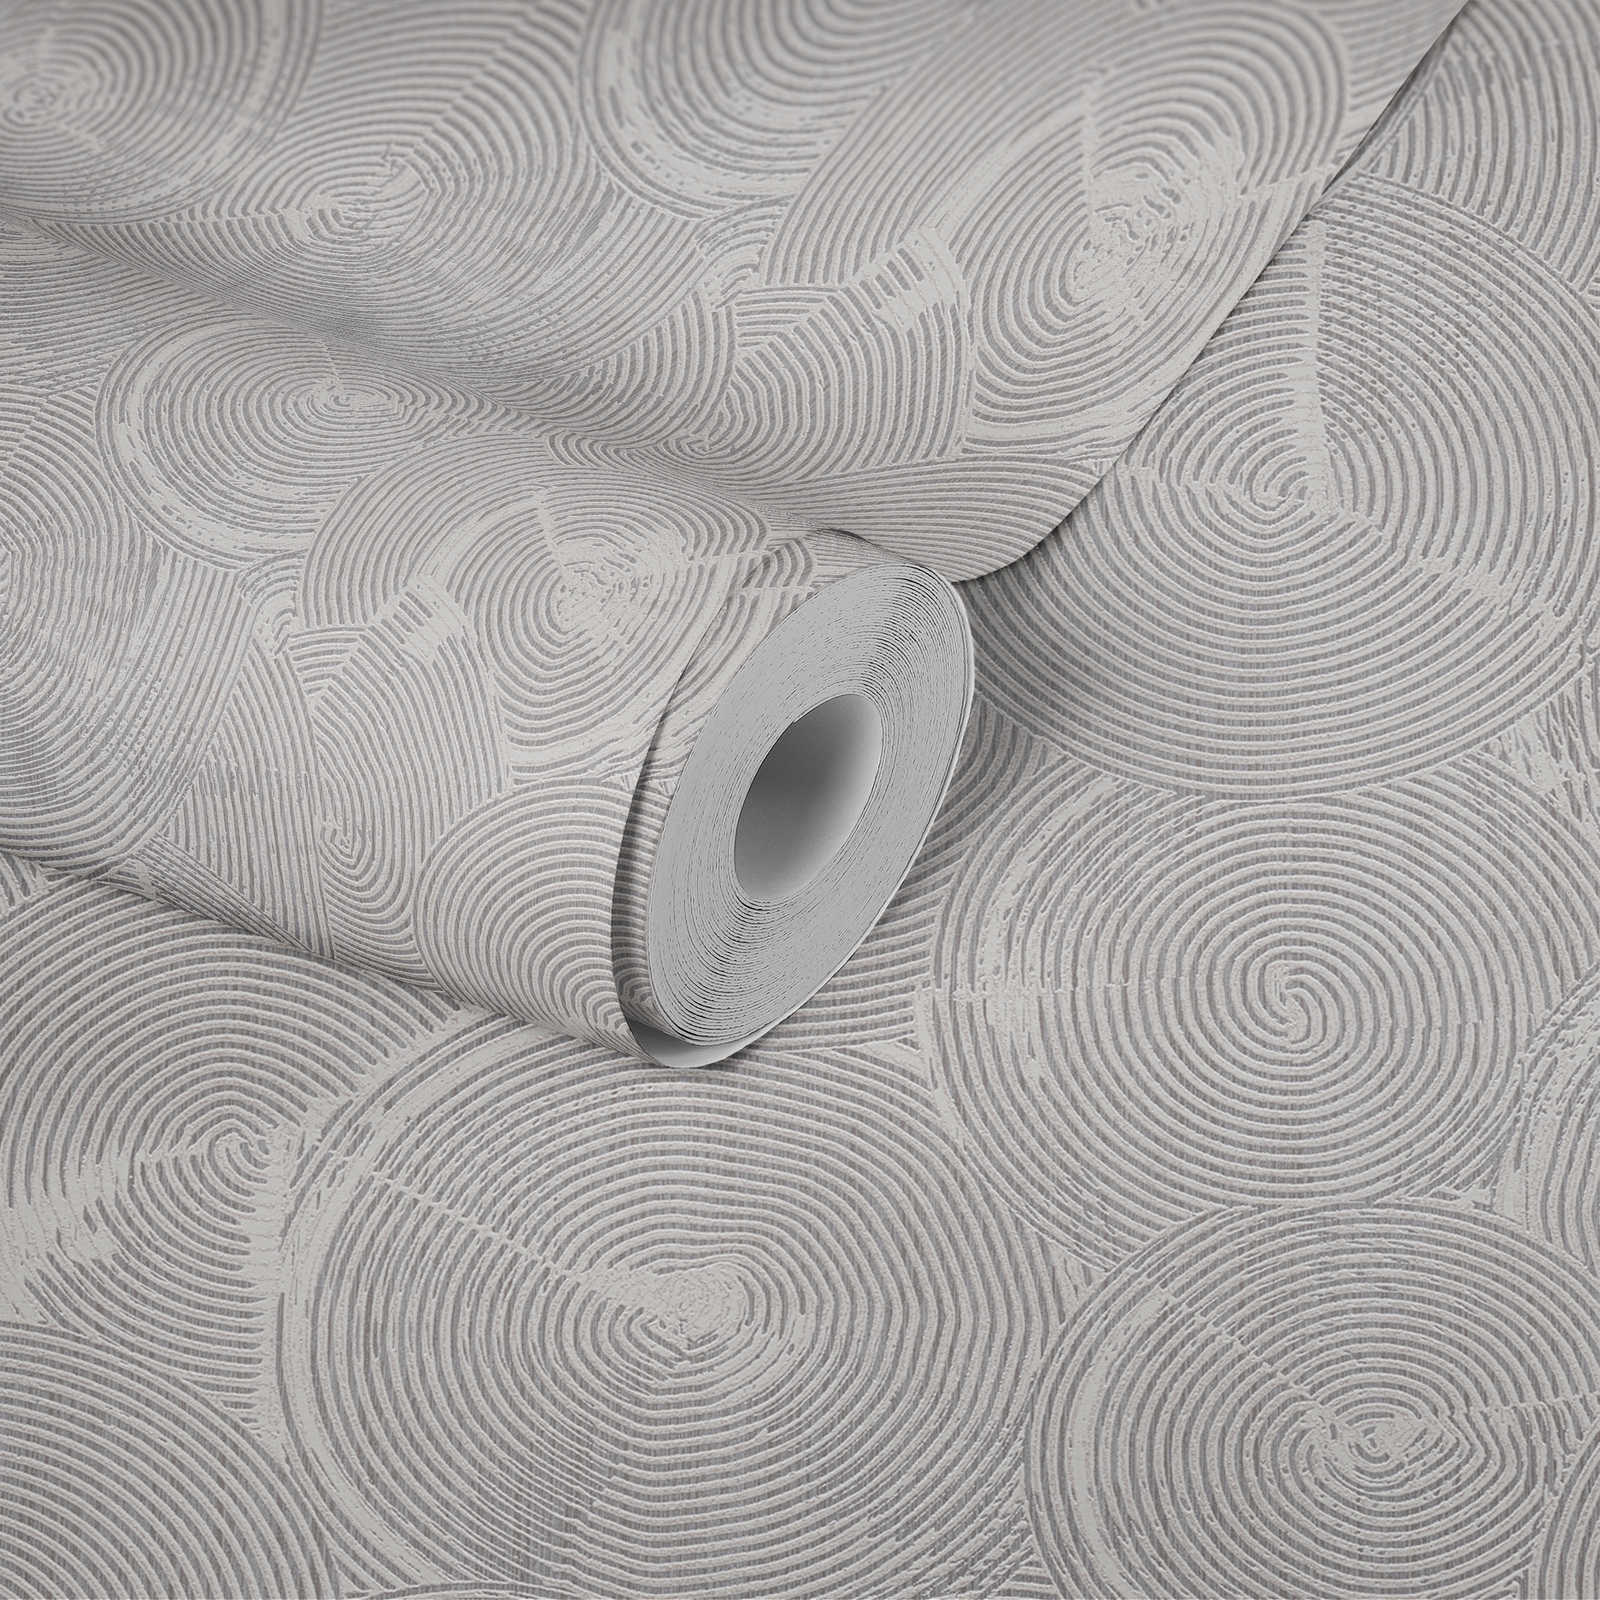             Plaster look wallpaper with silver metallic effect - grey, metallic, white
        